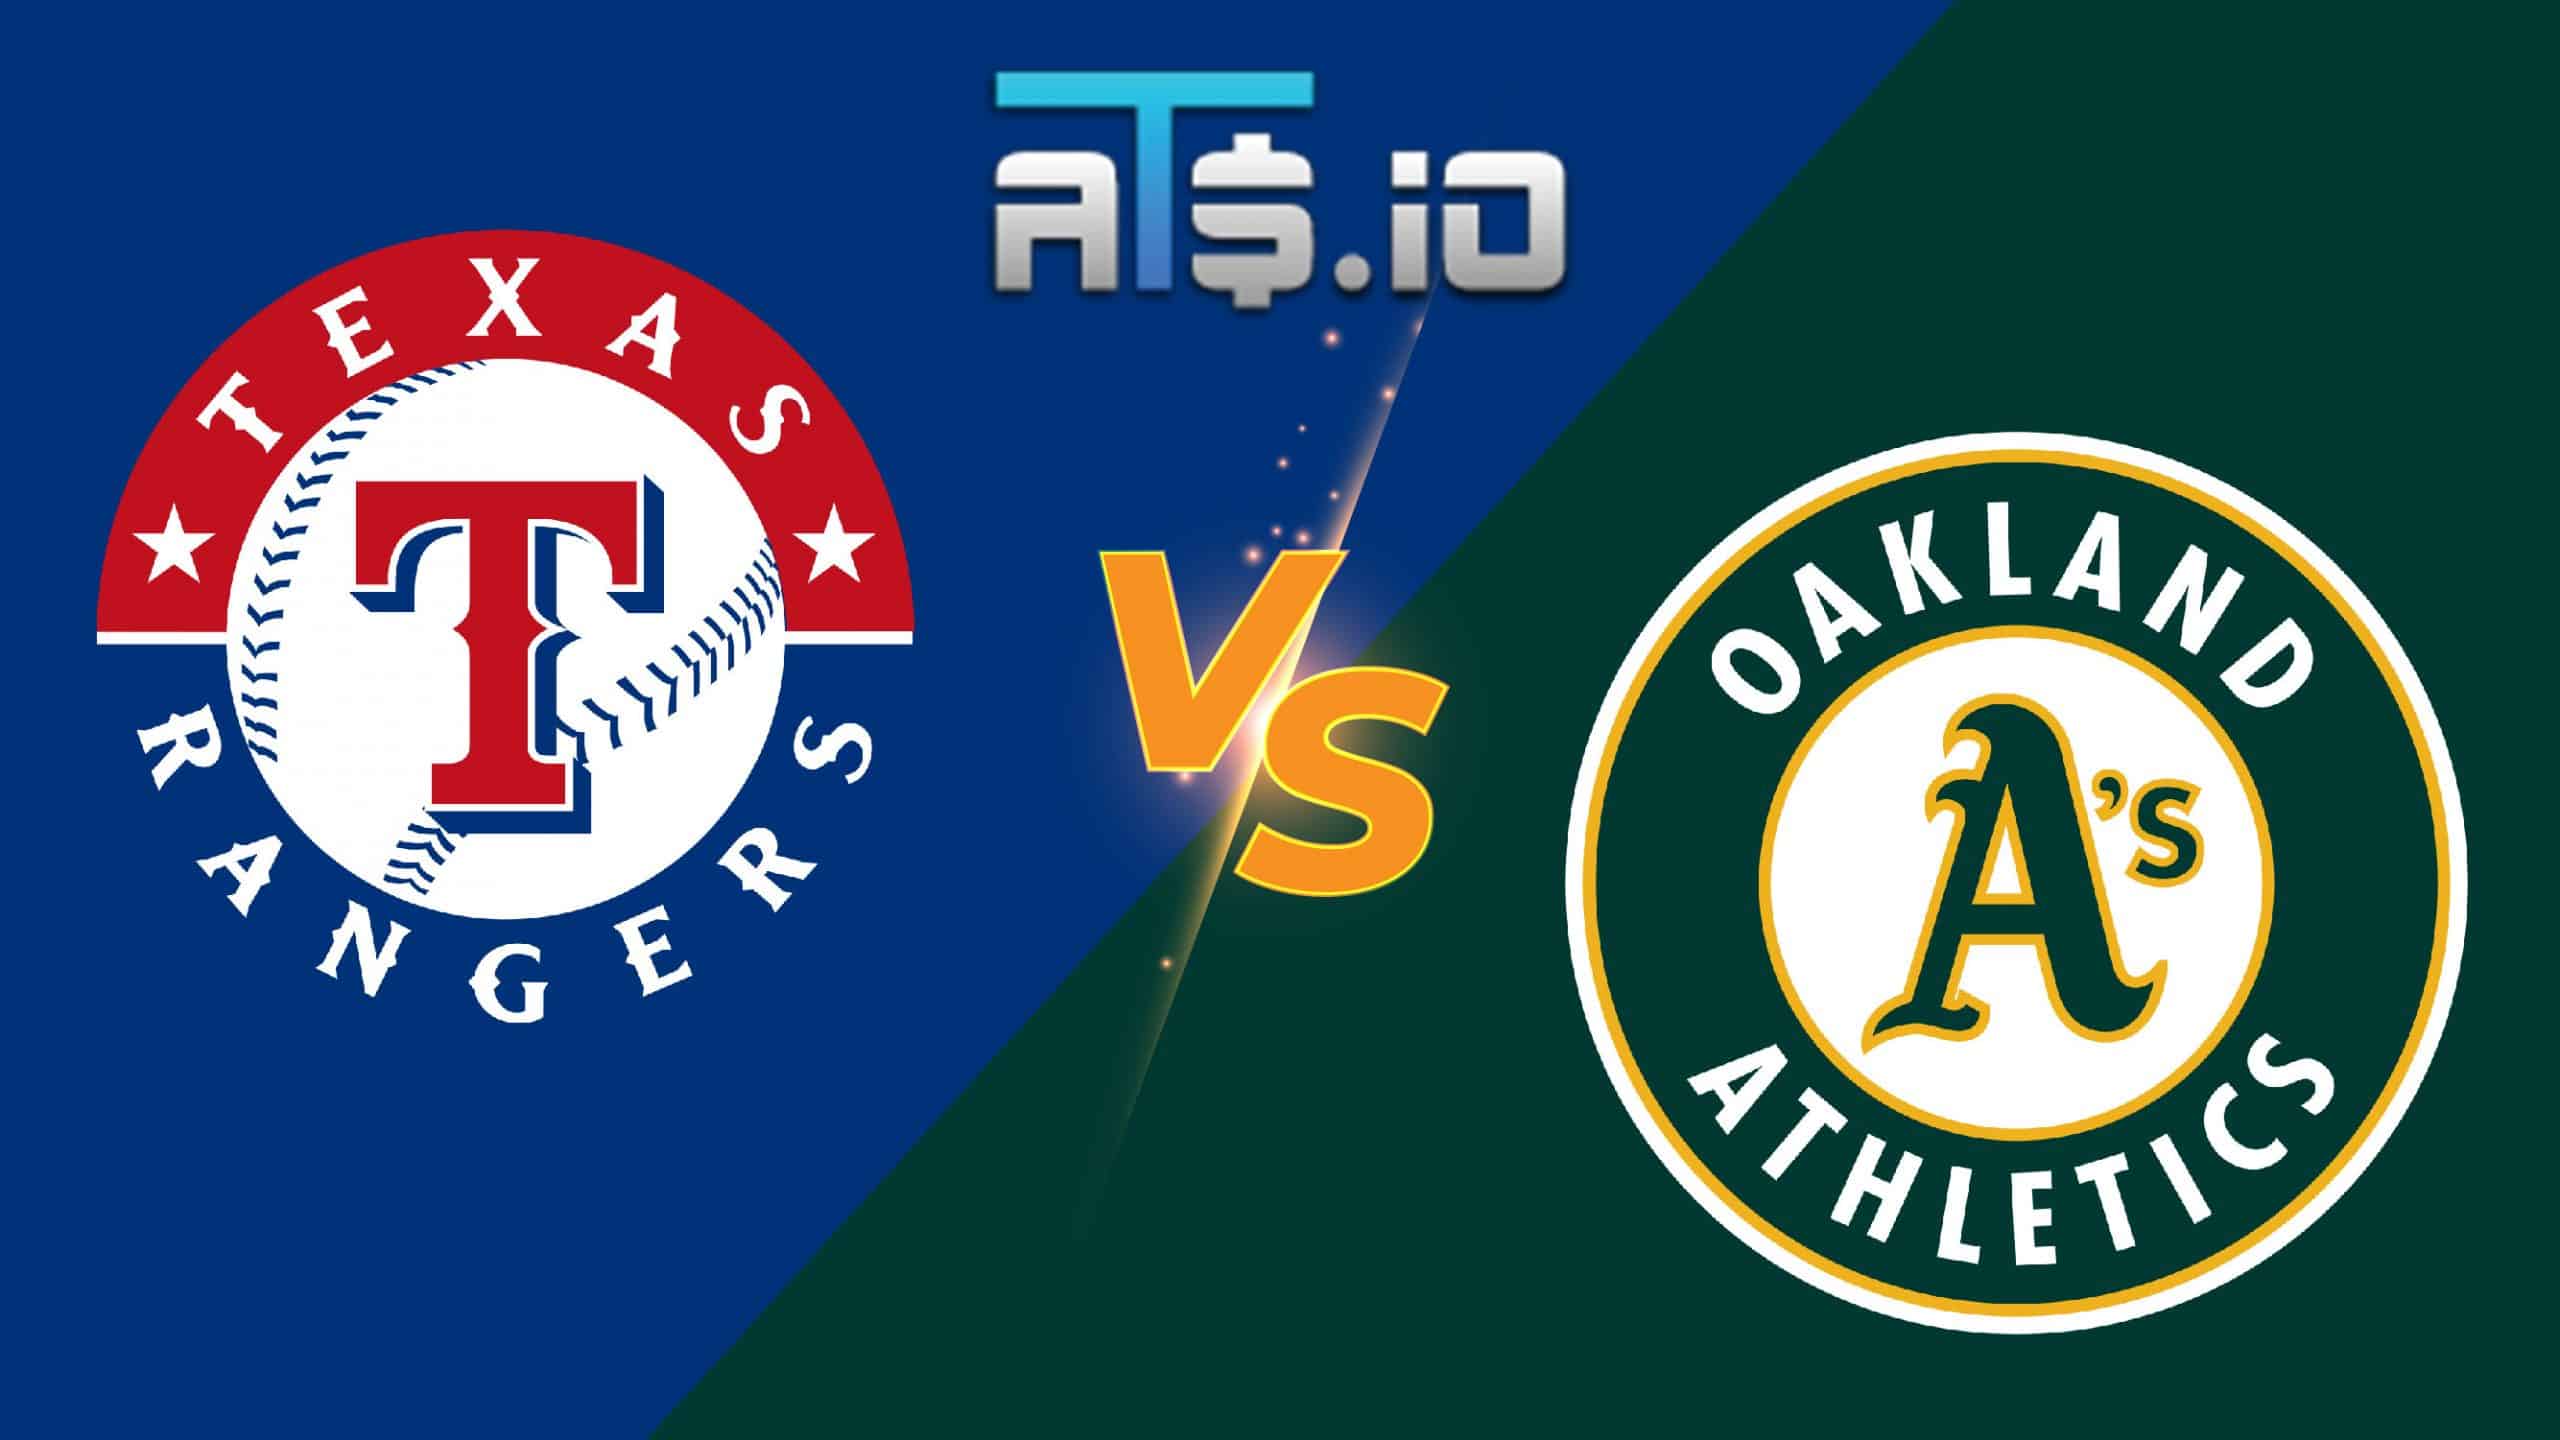 Texas Rangers vs Oakland Athletics Pick & Prediction 05/29/22